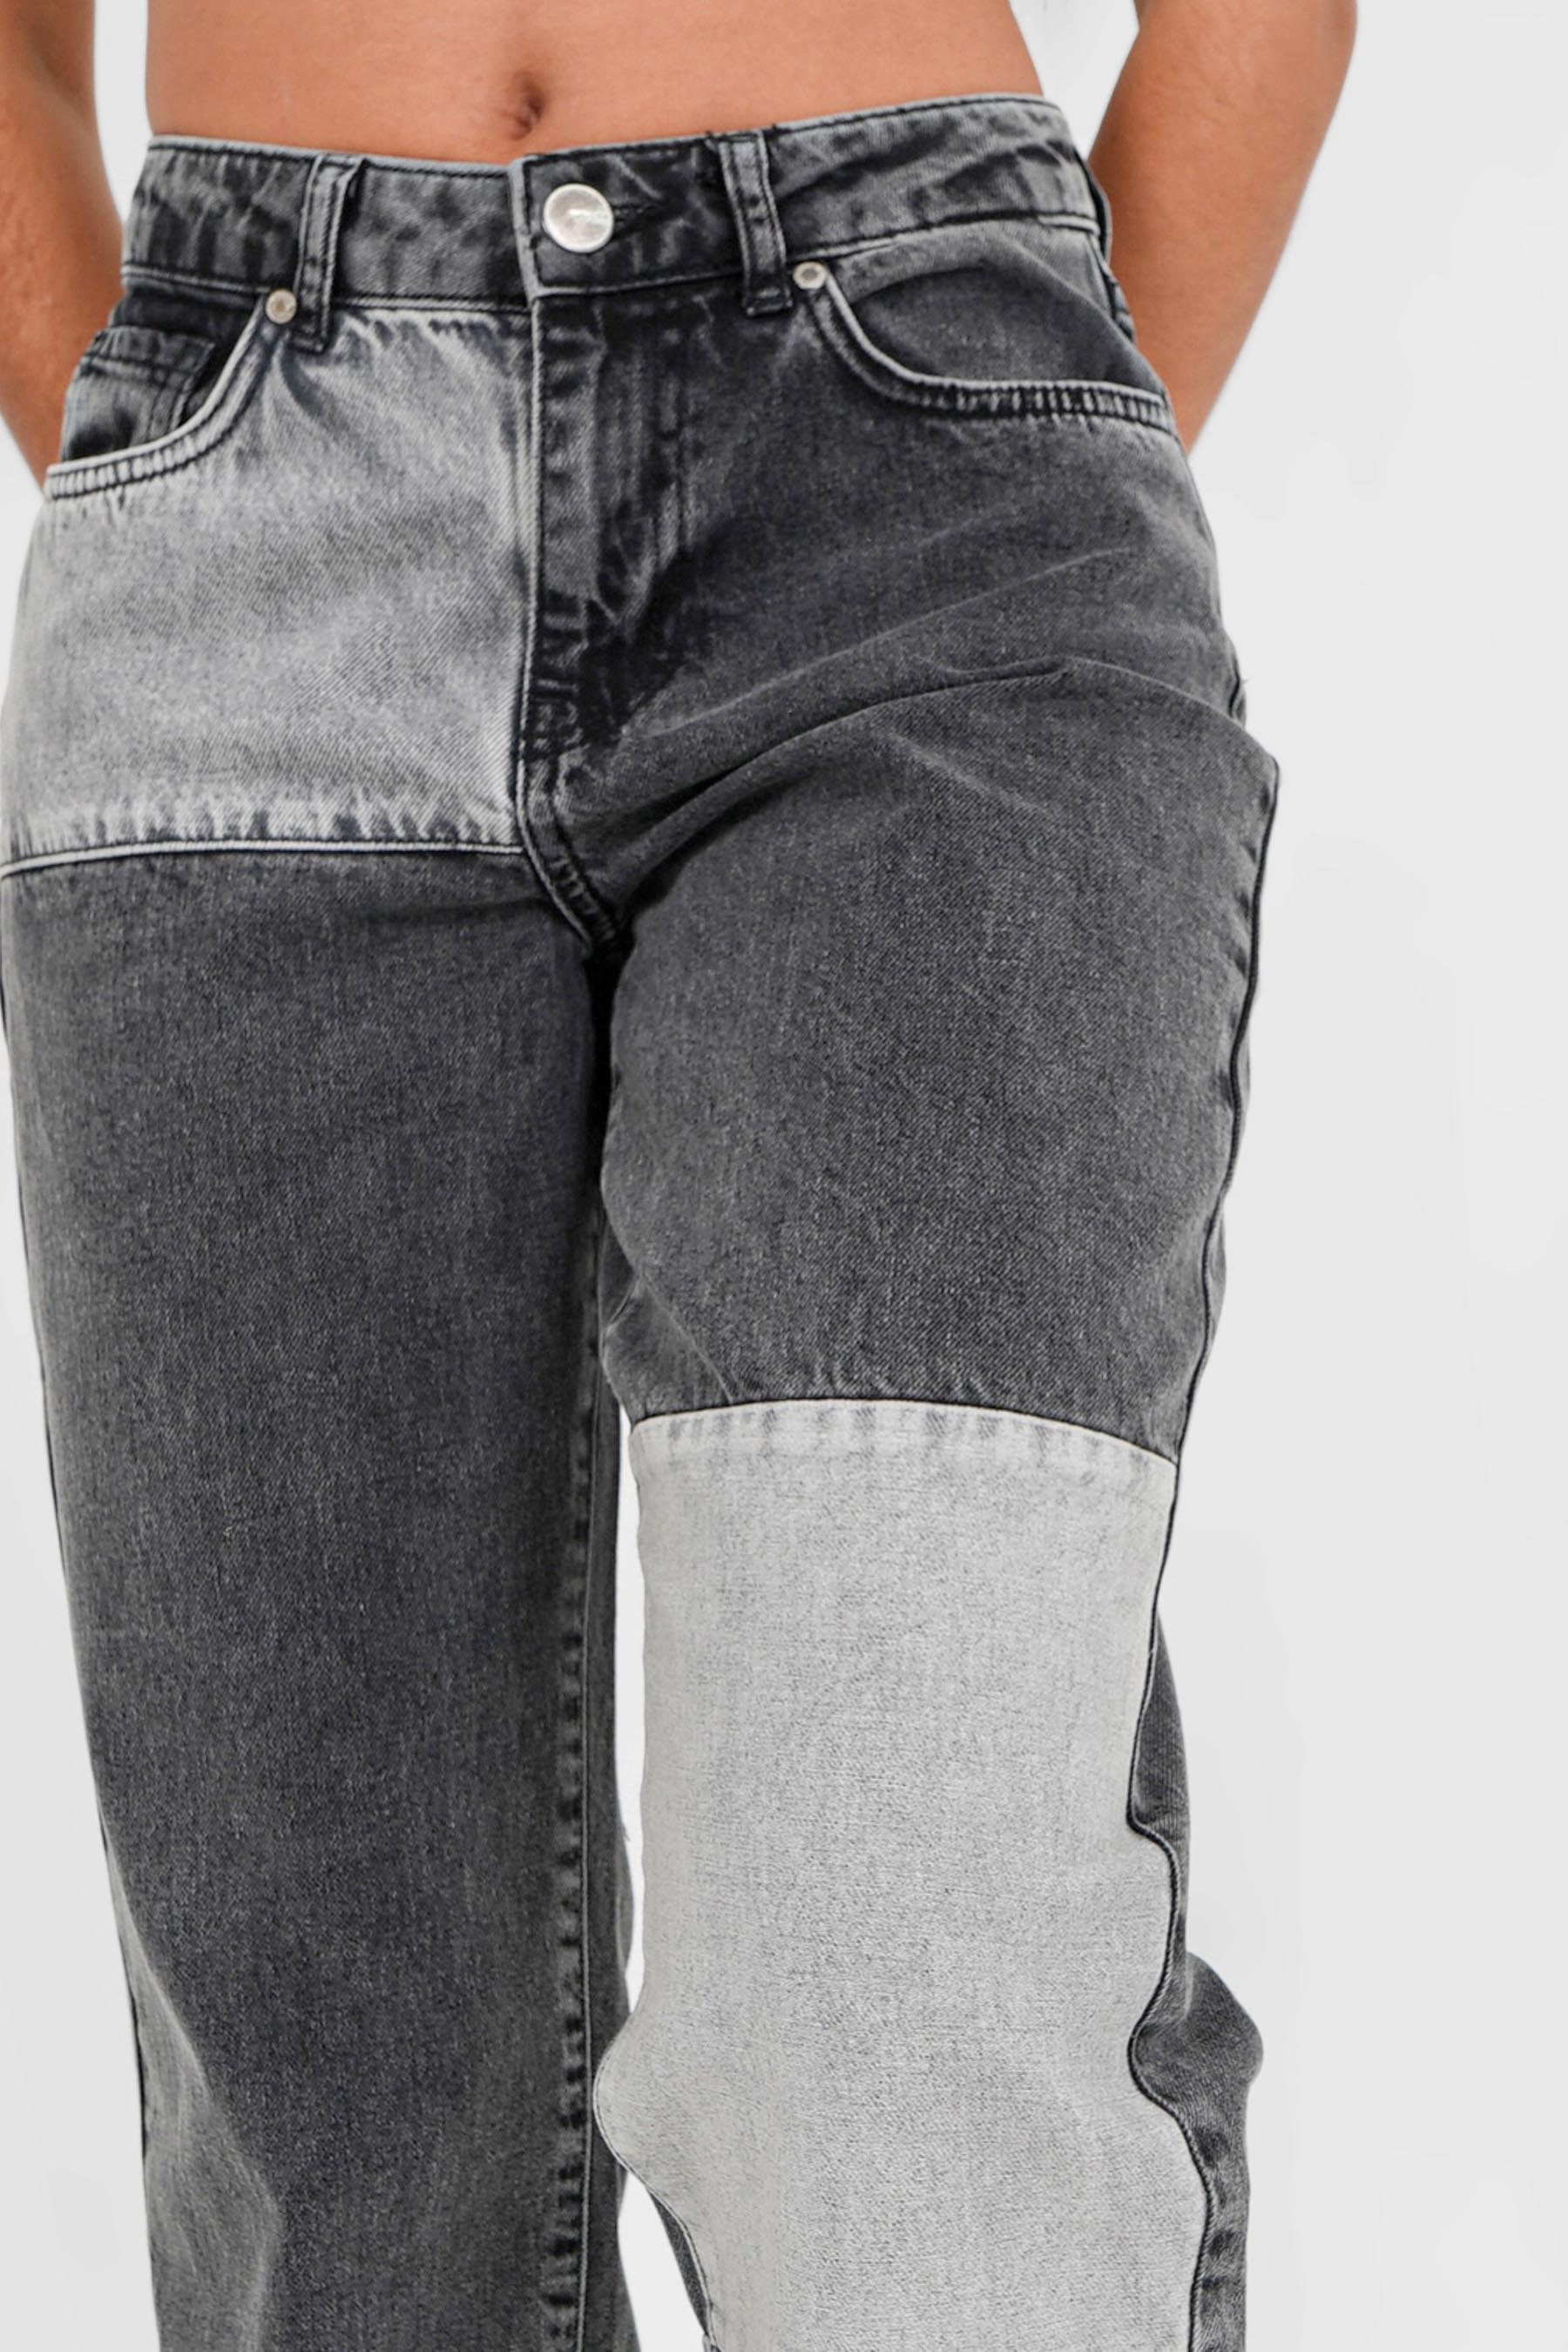 Patchwork large jeans dark Grey